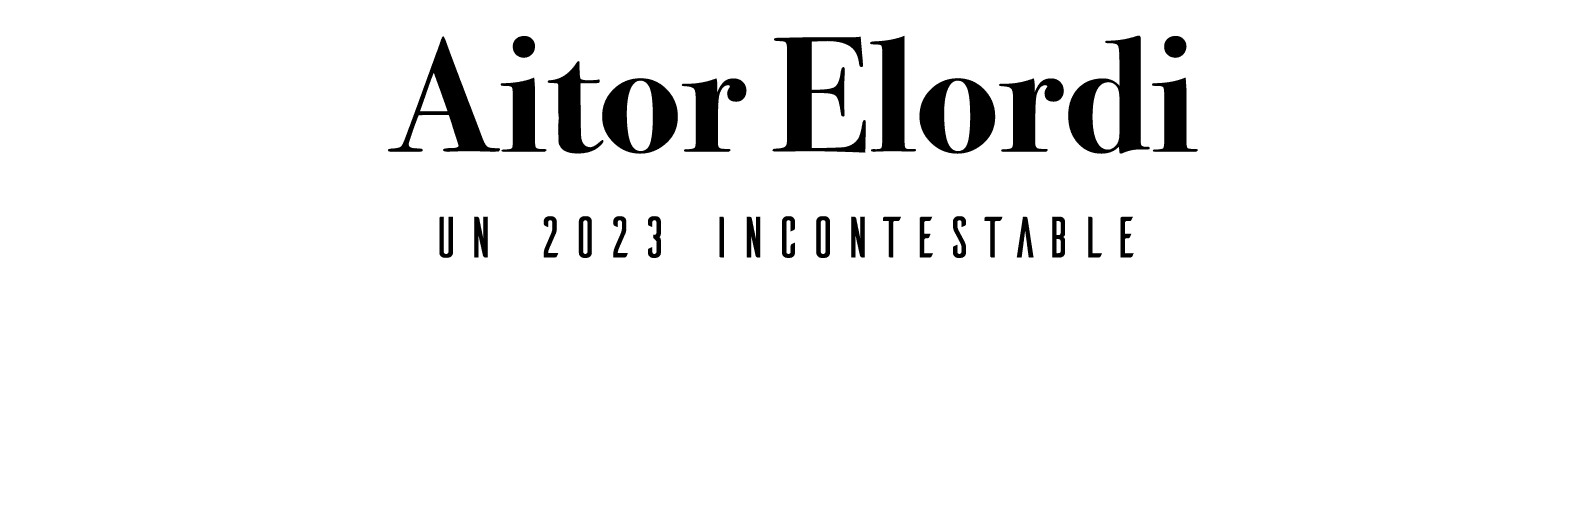 Aitor Elordi Un 2023 incontestablE